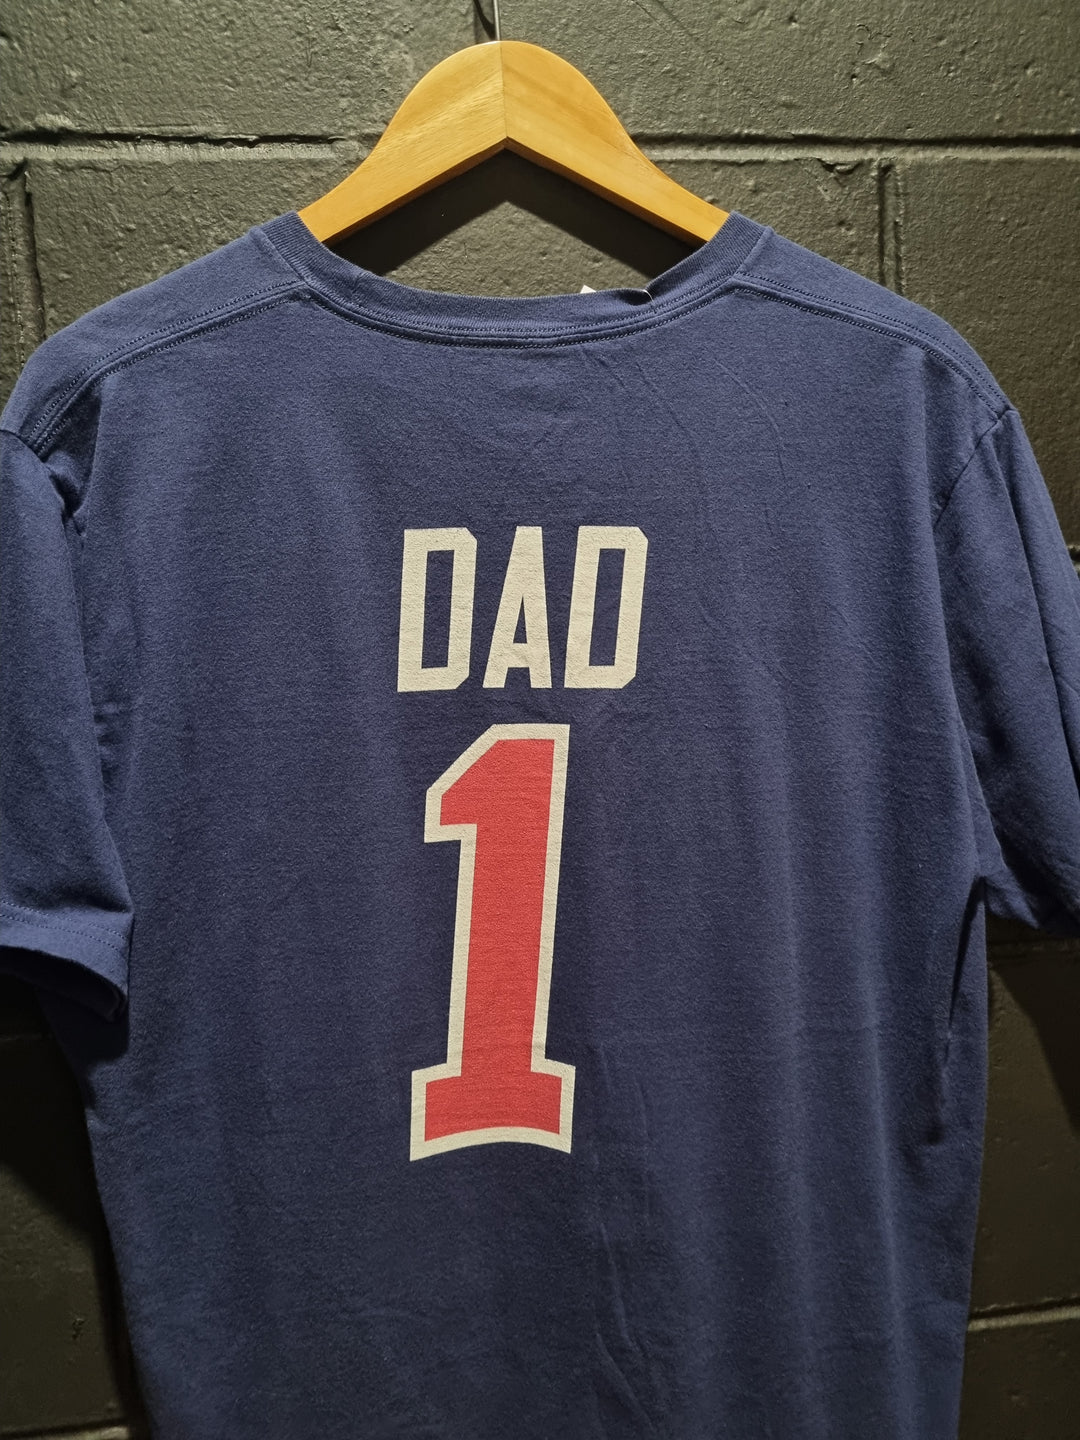 Cleveland Indians #1 Dad Fanatics Large